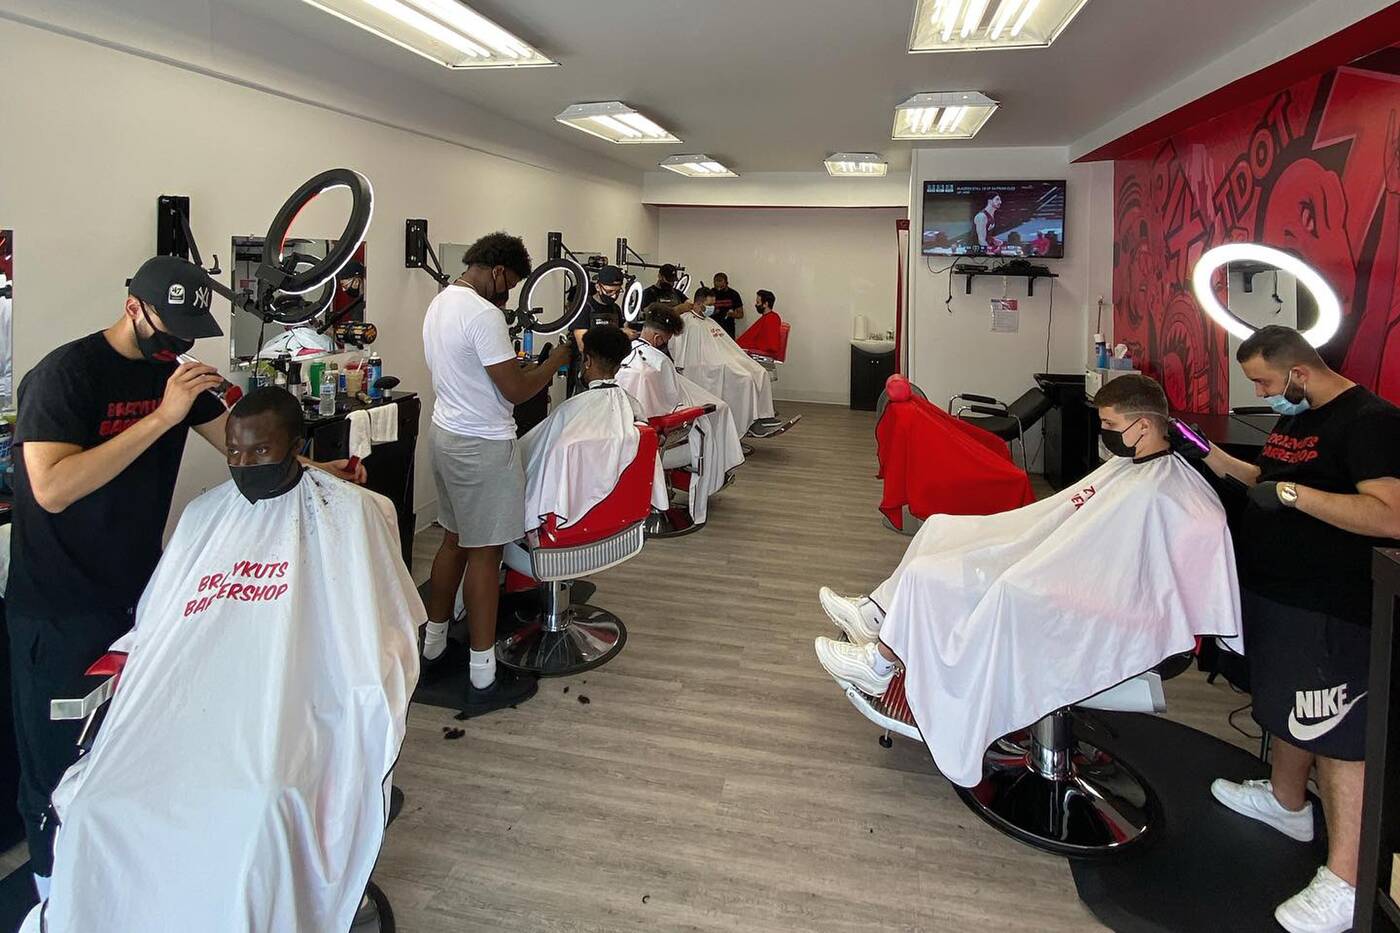 brazycuts barbershop